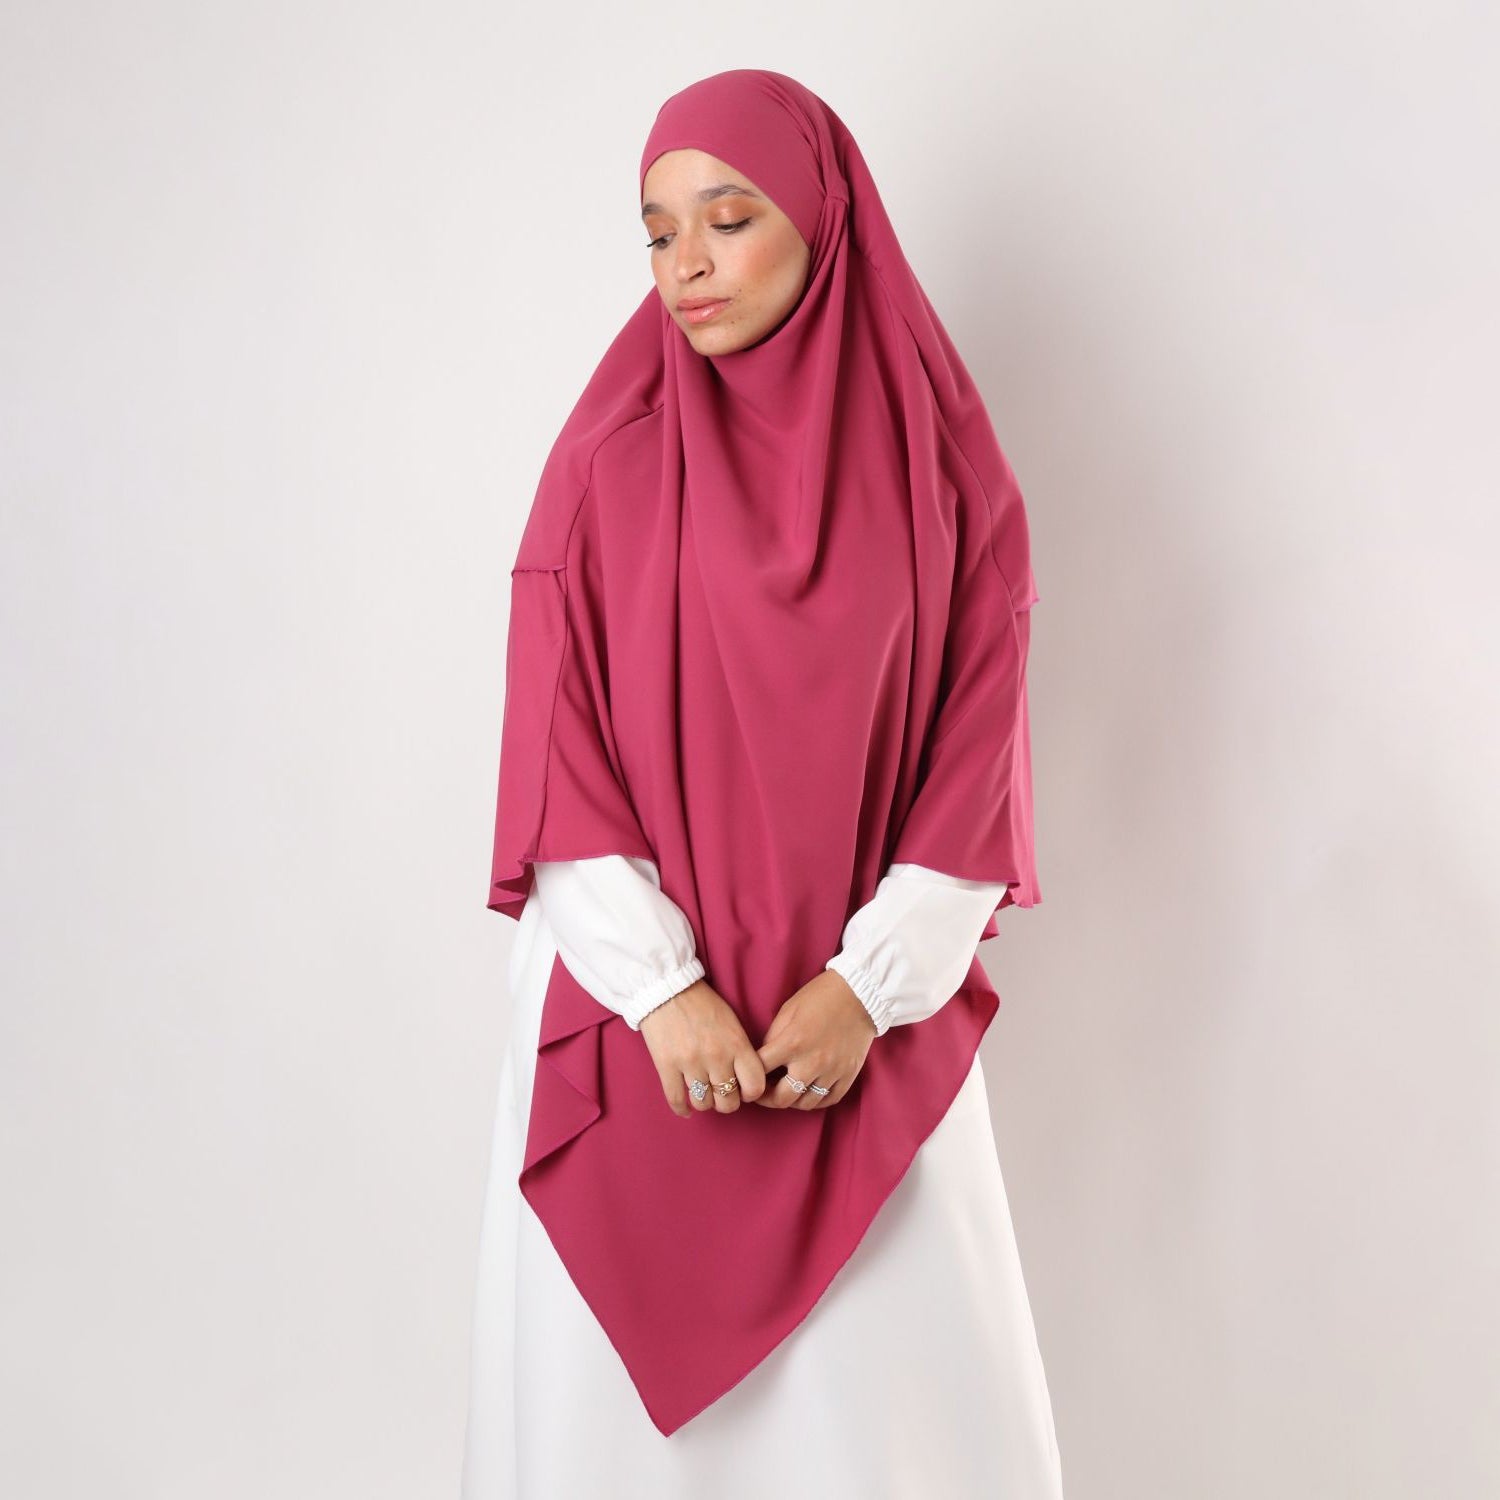 Khimar : 2 Layer Triangular Diamond Instant Khimar-Hijab-Jilbab for Girls & Women in Maroon Color | Tie Back Burkha Jilbab Khimar Style Abaya Hijab Niqab Islamic Modest Wear